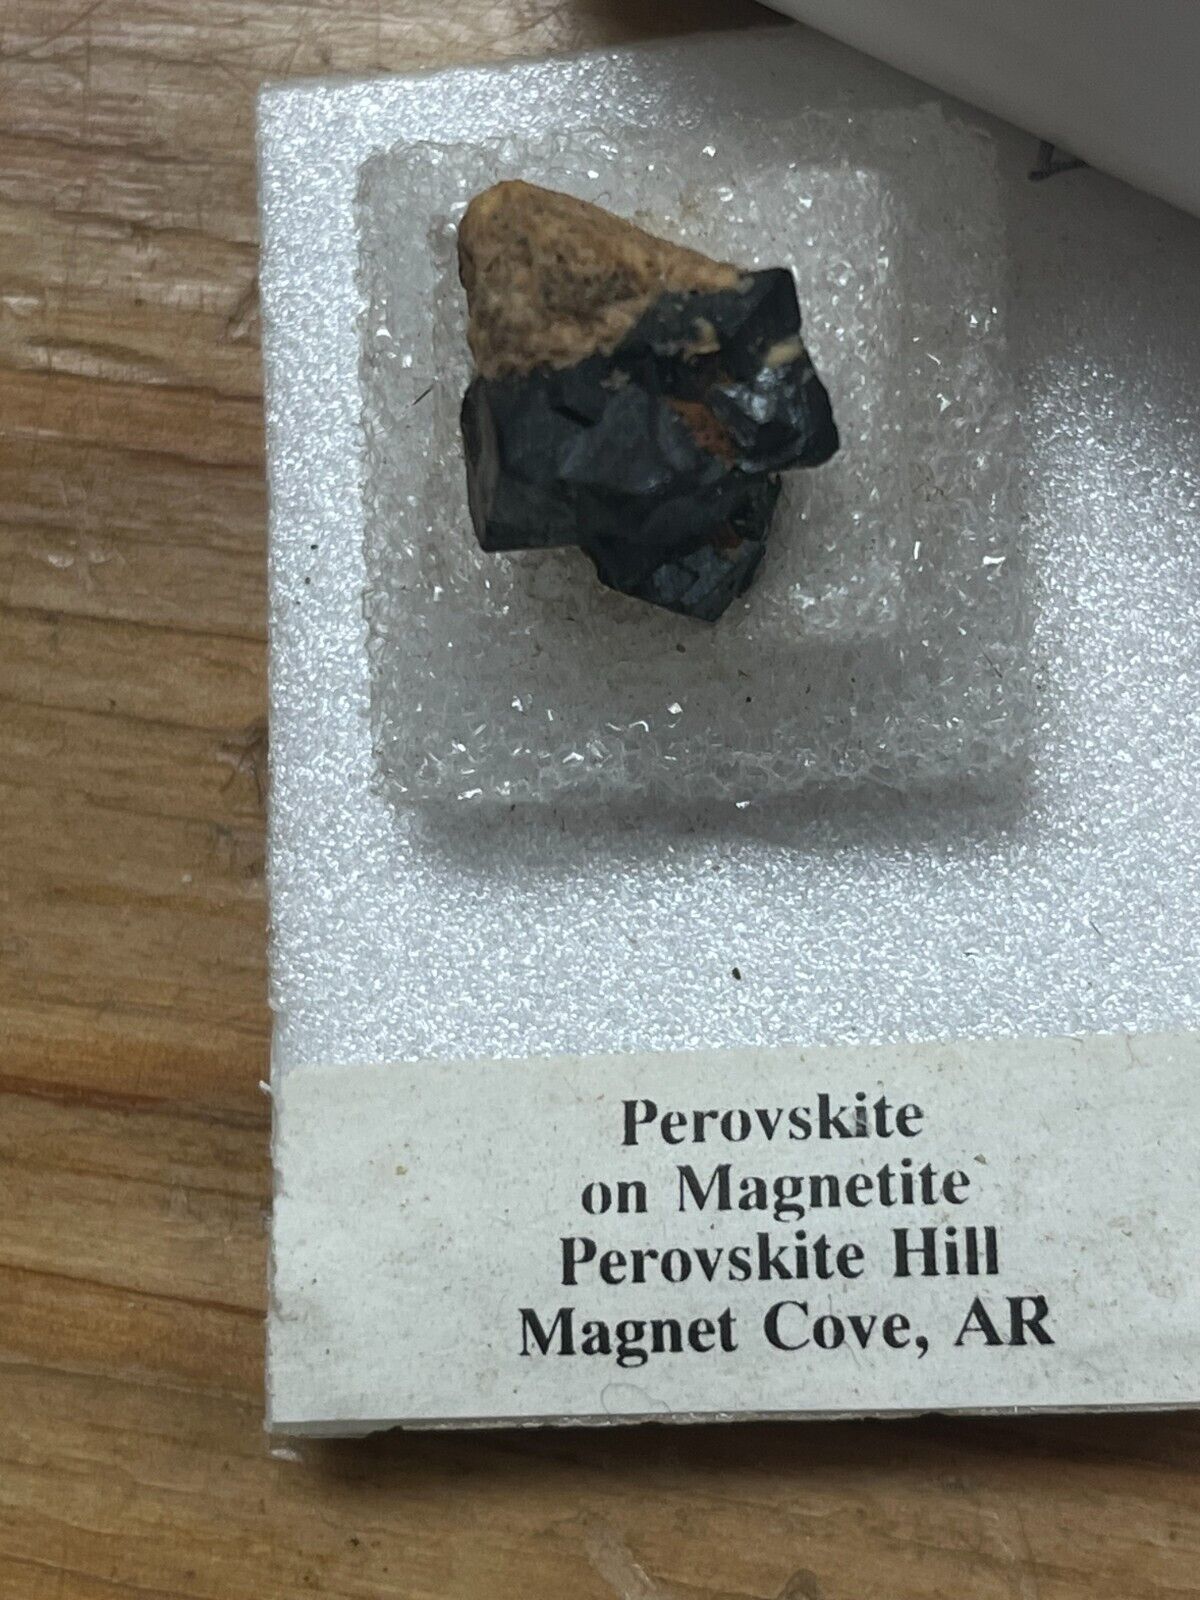 Perovskite from Perovskite Hill, Magnet Cove, Arkansas